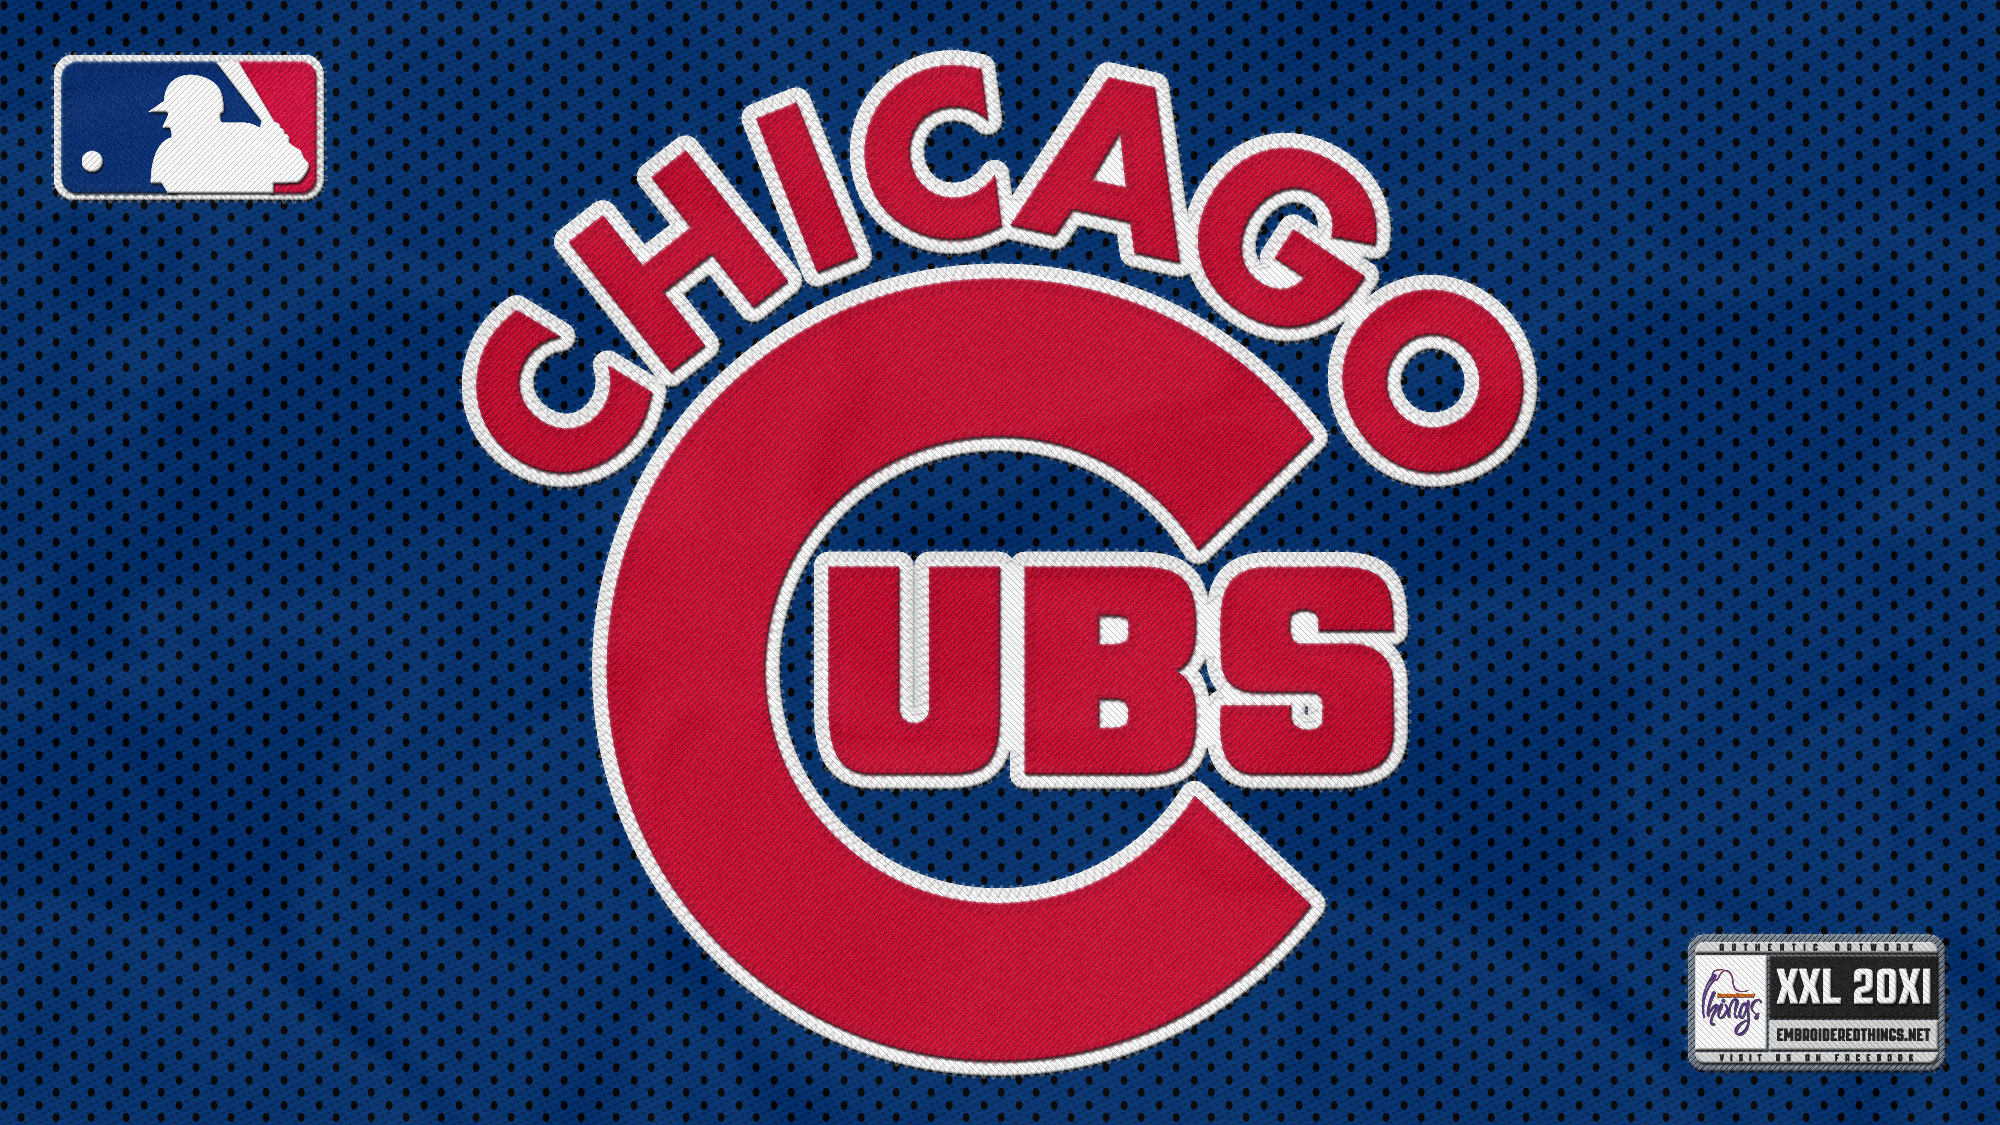 CHICAGO CUBS mlb baseball 9 wallpaper 2000x1125 232516